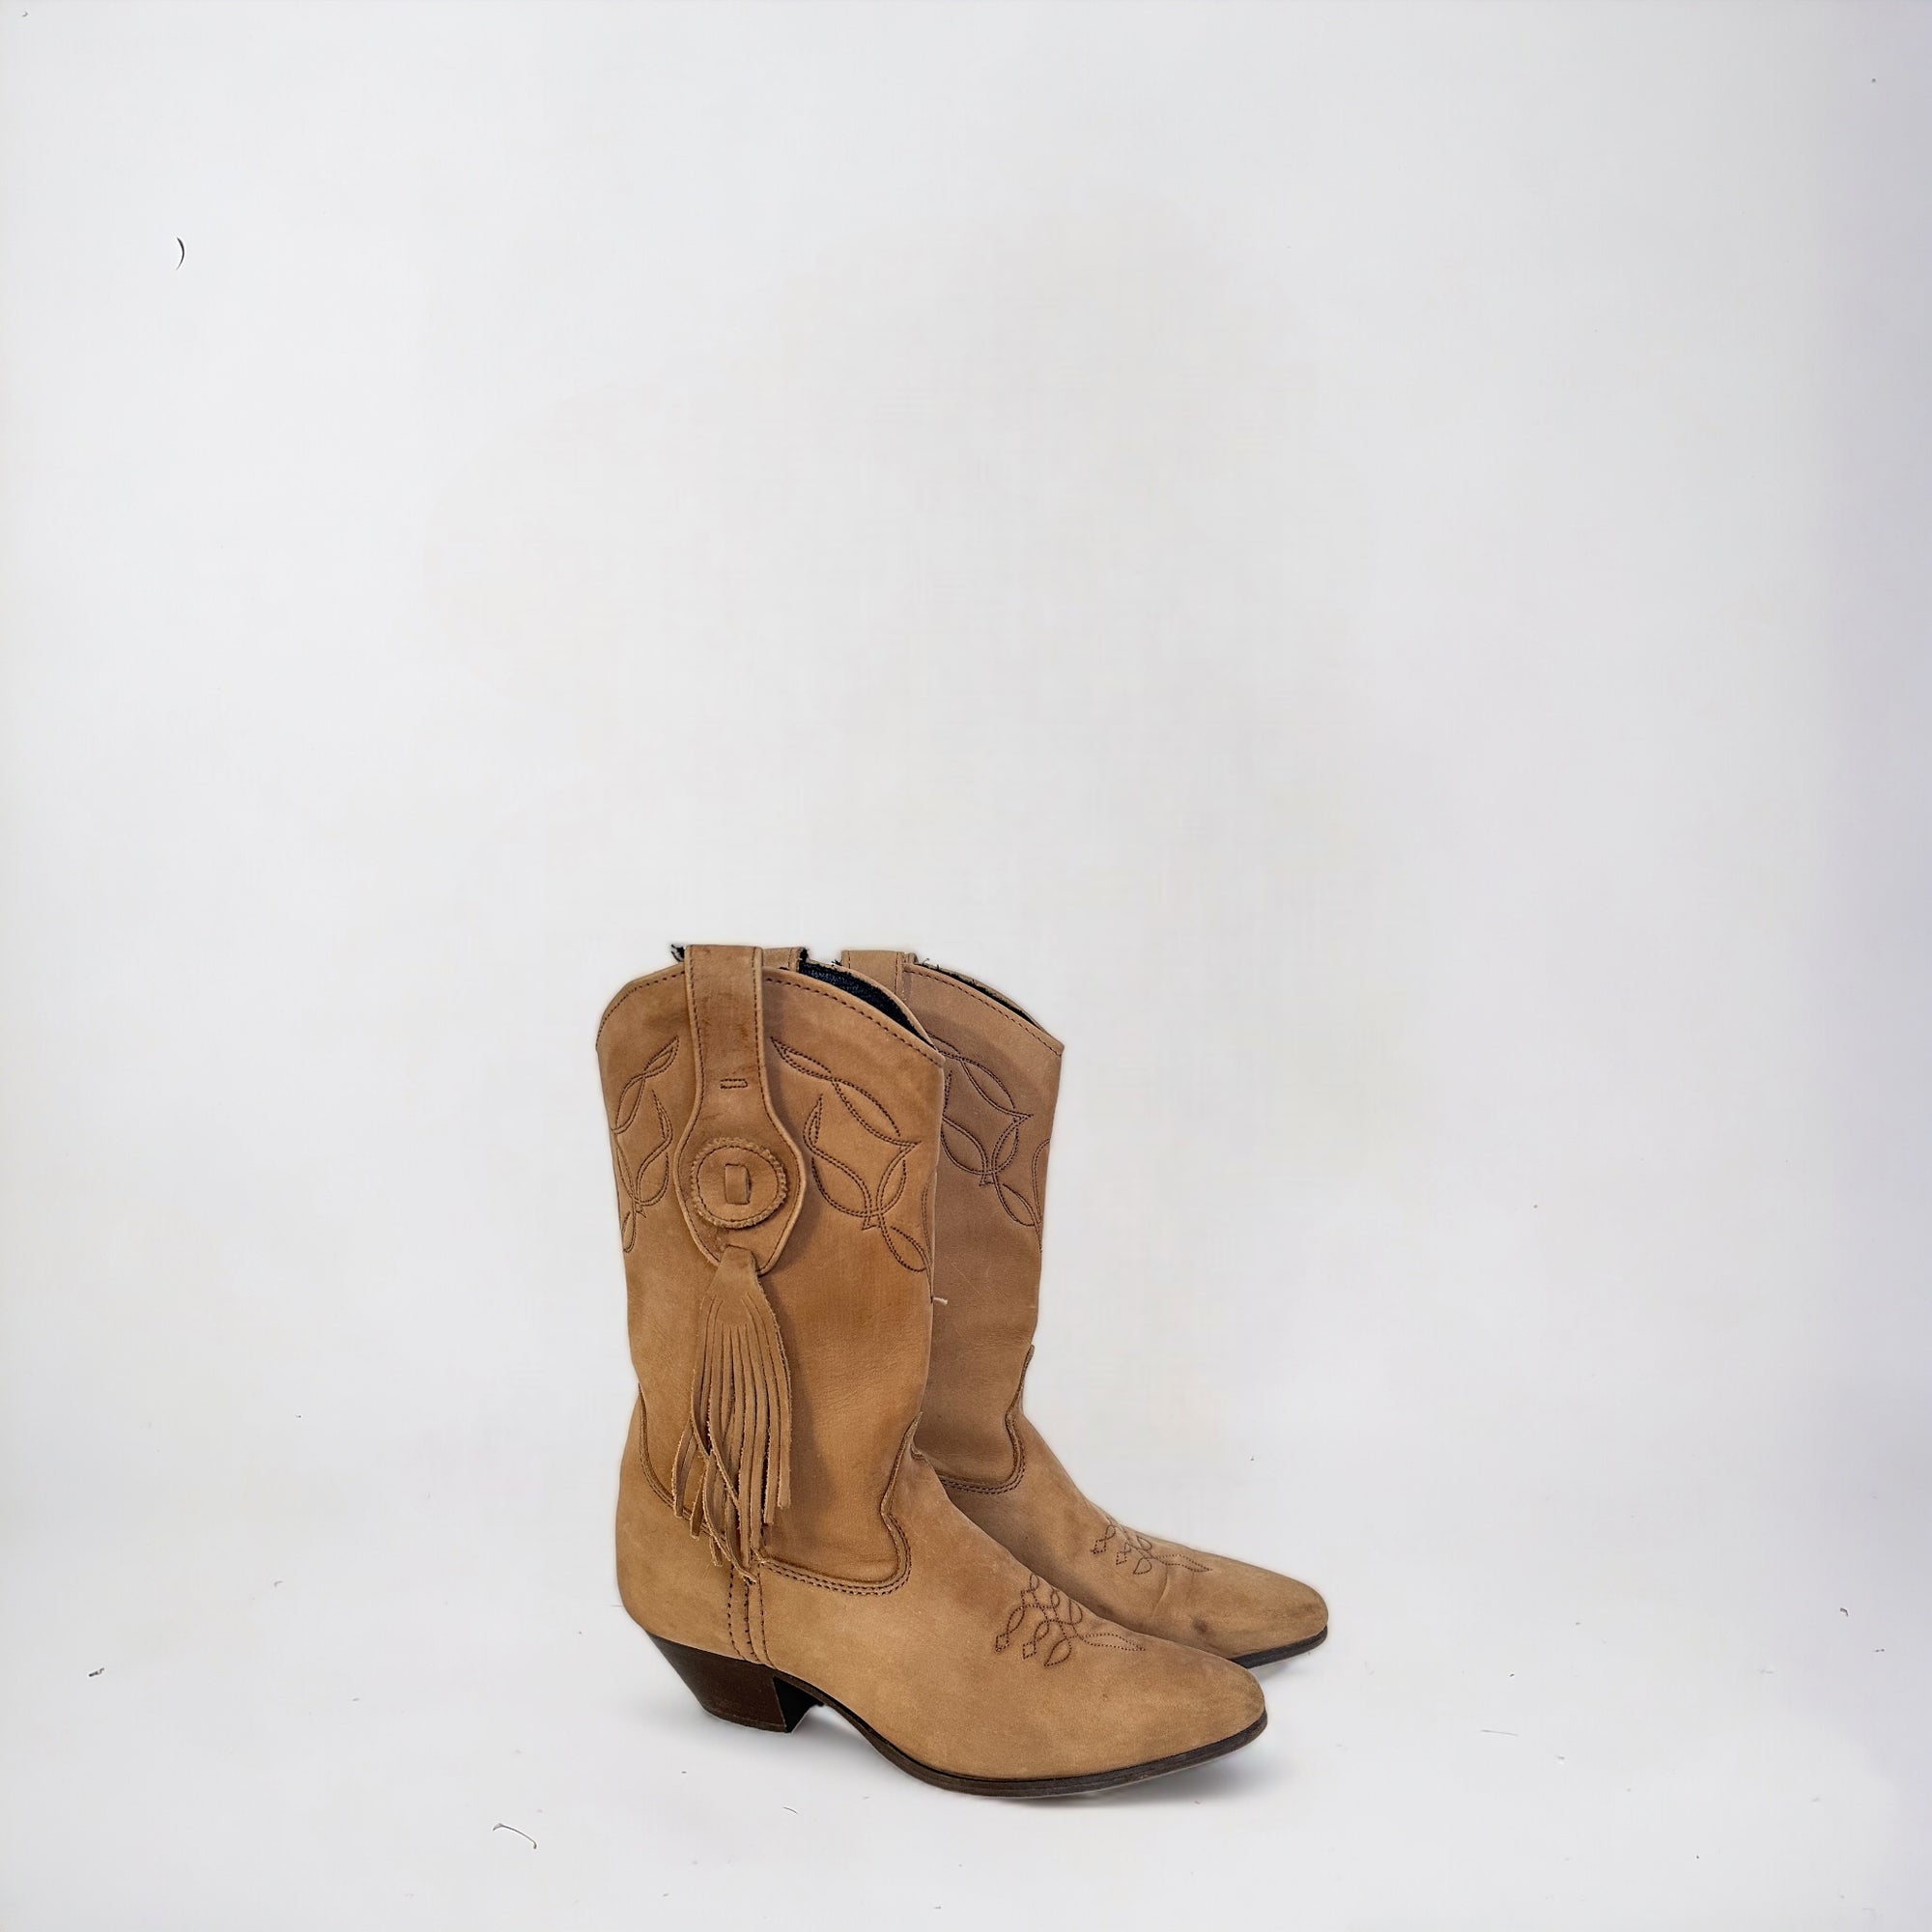 Laredo Cowboy Boots